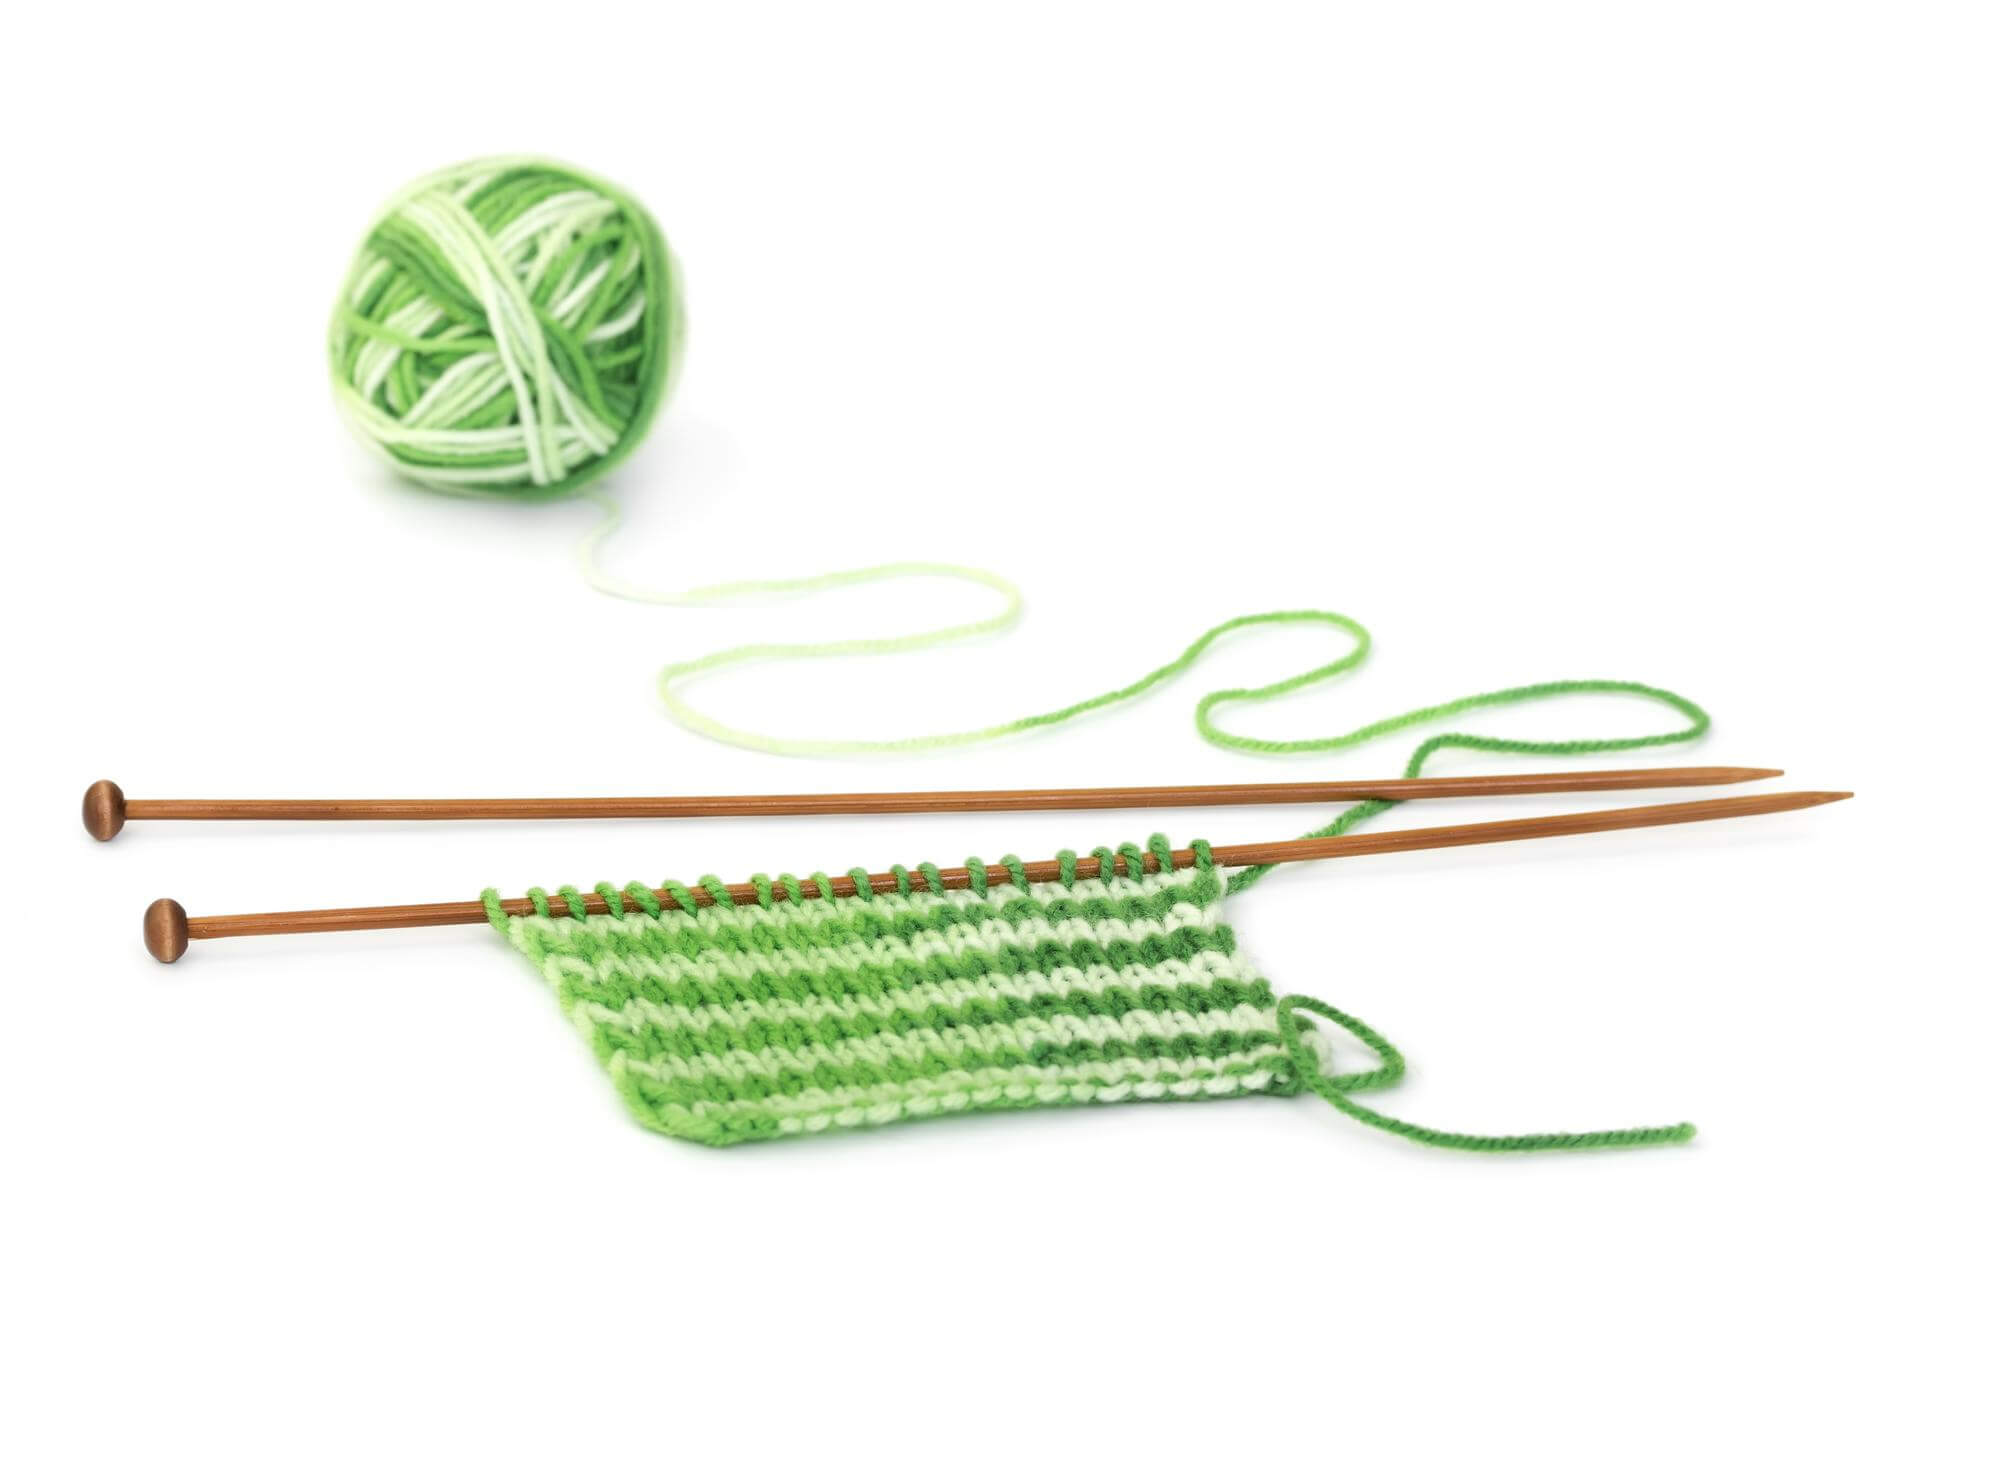 Wooden knitting needles